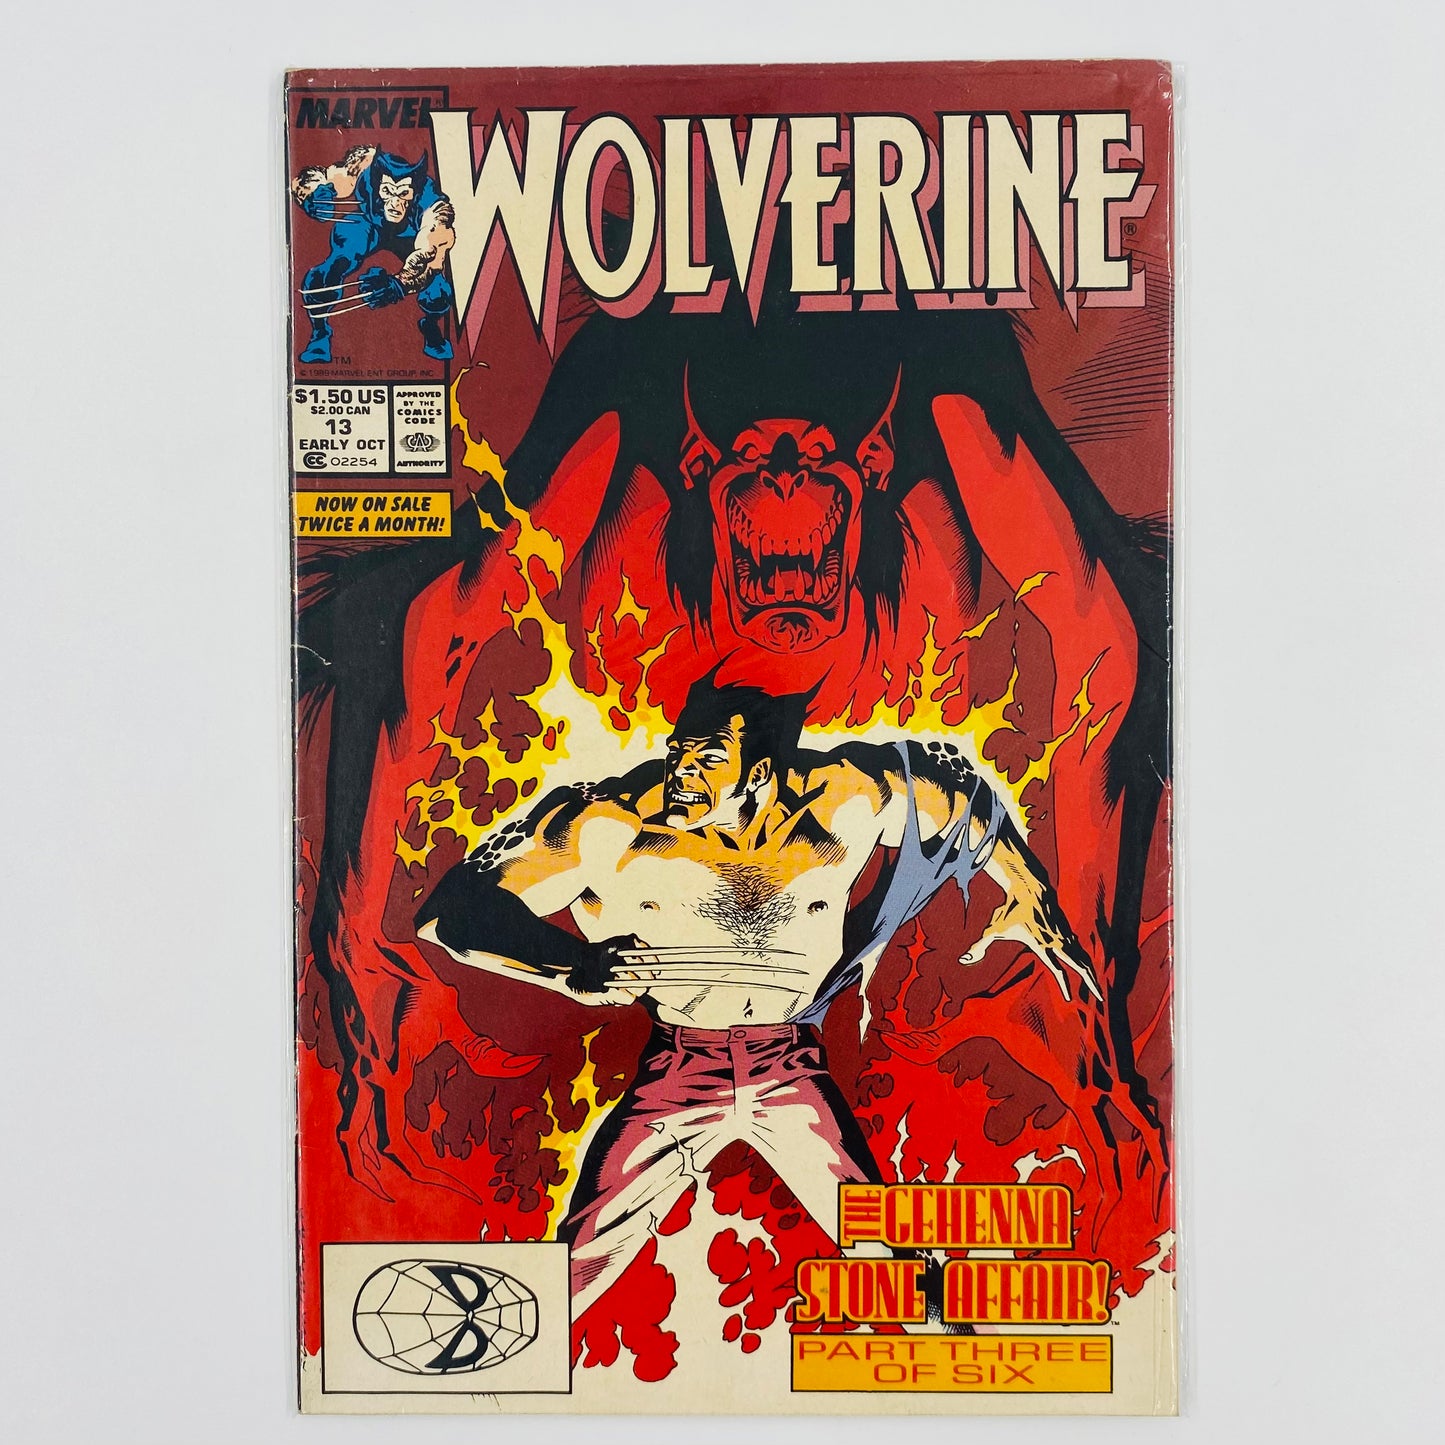 Wolverine #13 “Blood Ties!” (1989) Marvel